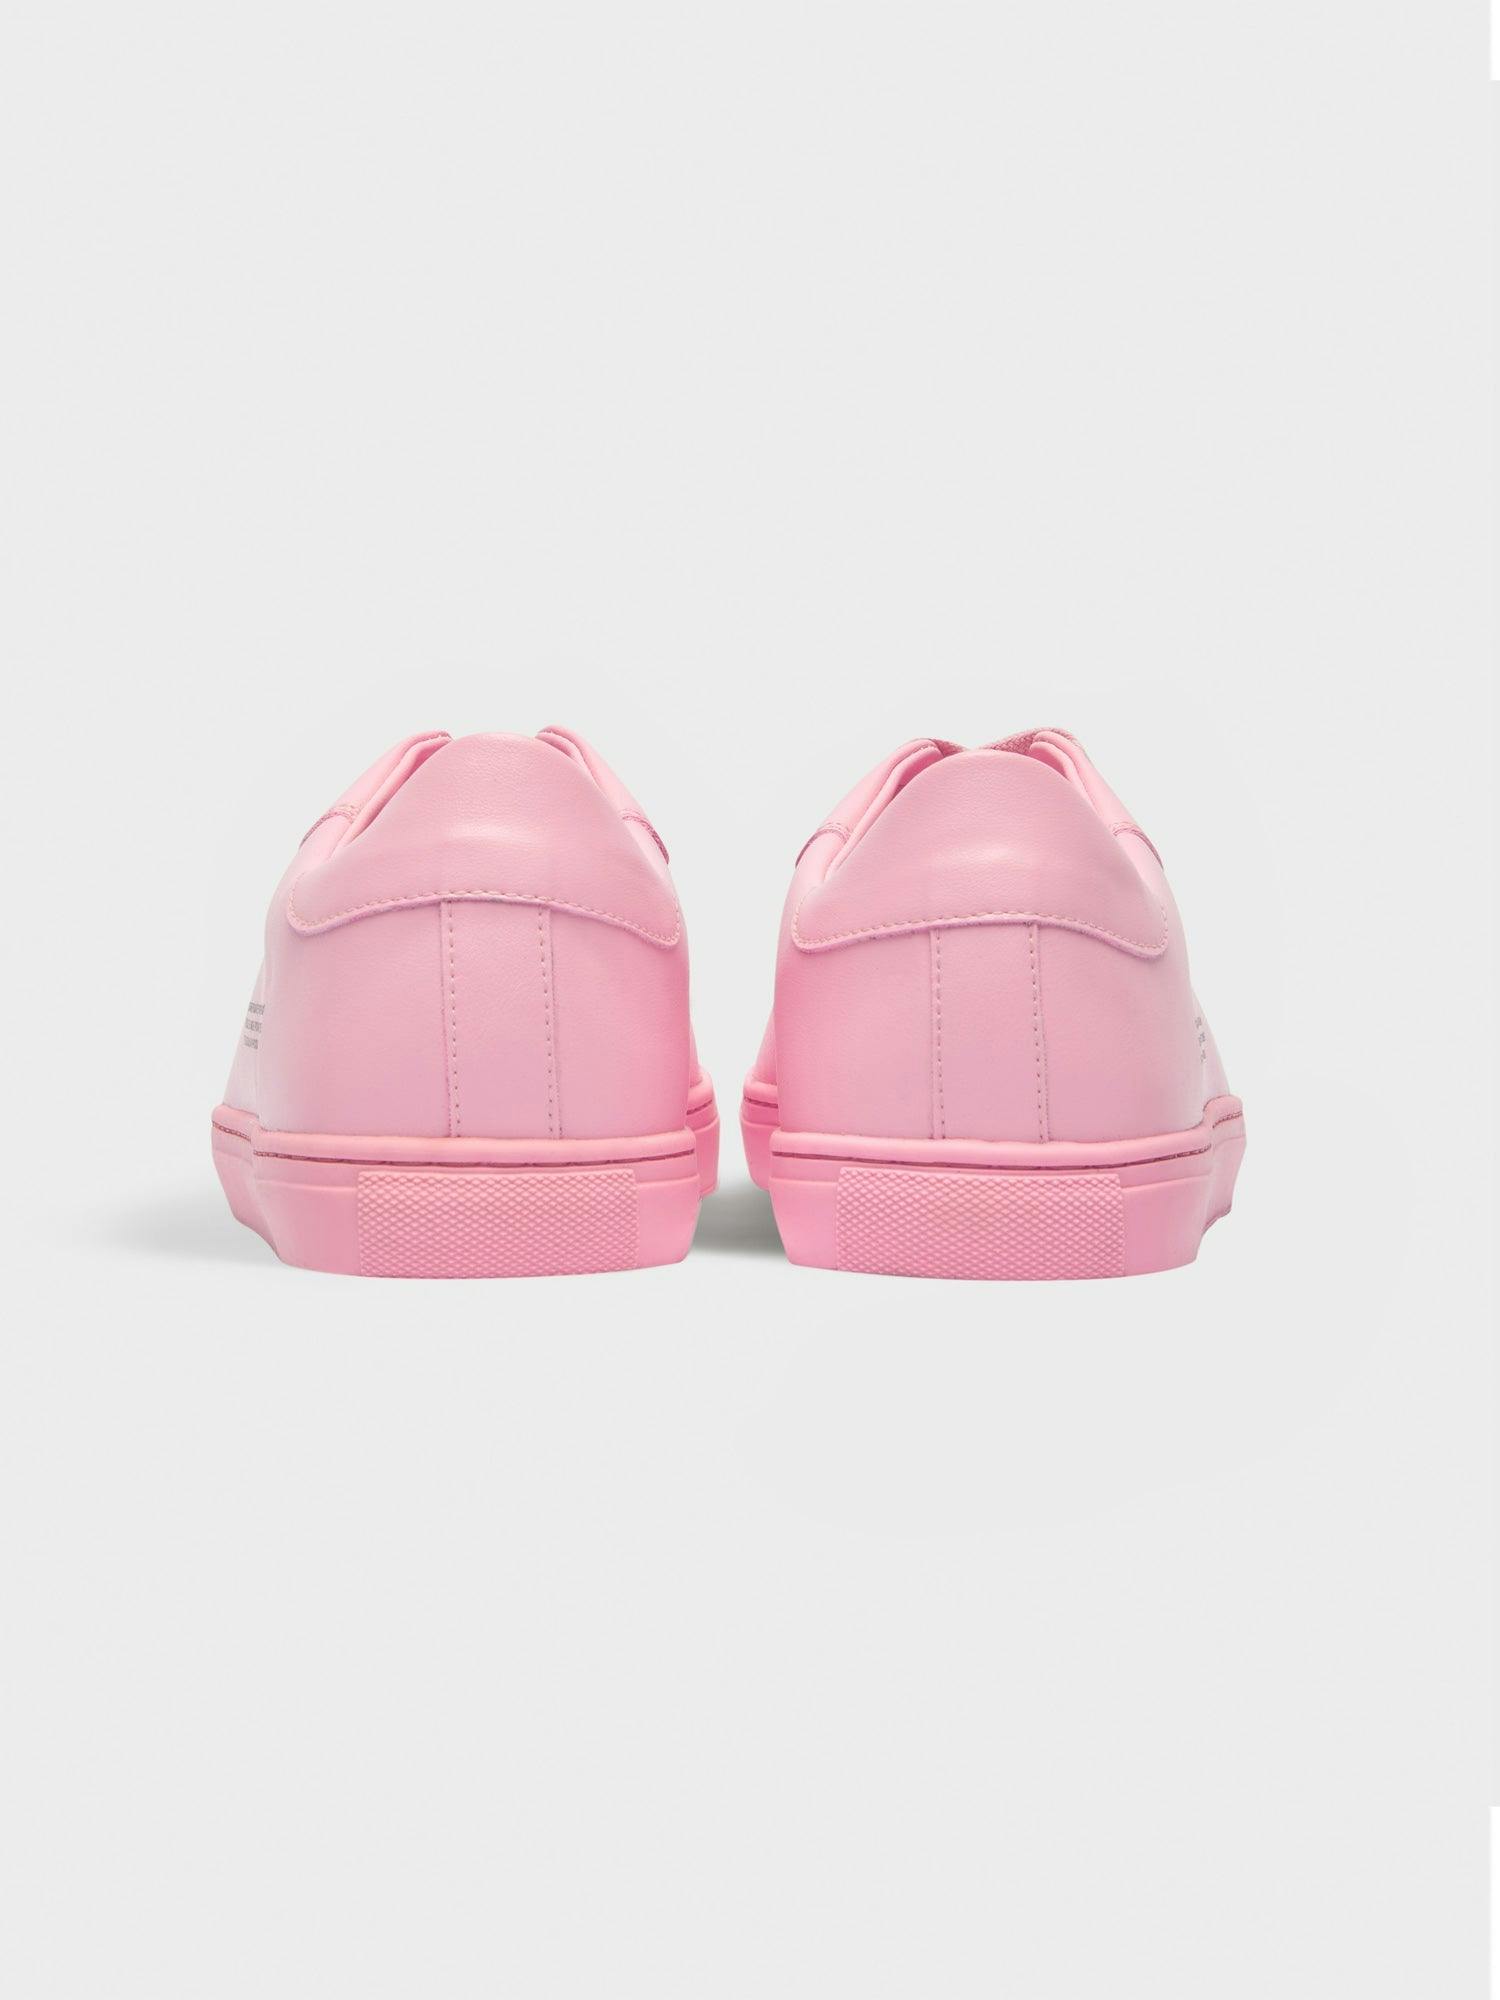 https://cdn.shopify.com/s/files/1/0035/1309/0115/products/Grape-Leather-Sneakers-Sakura-Pink-2.jpg?v=1686668992